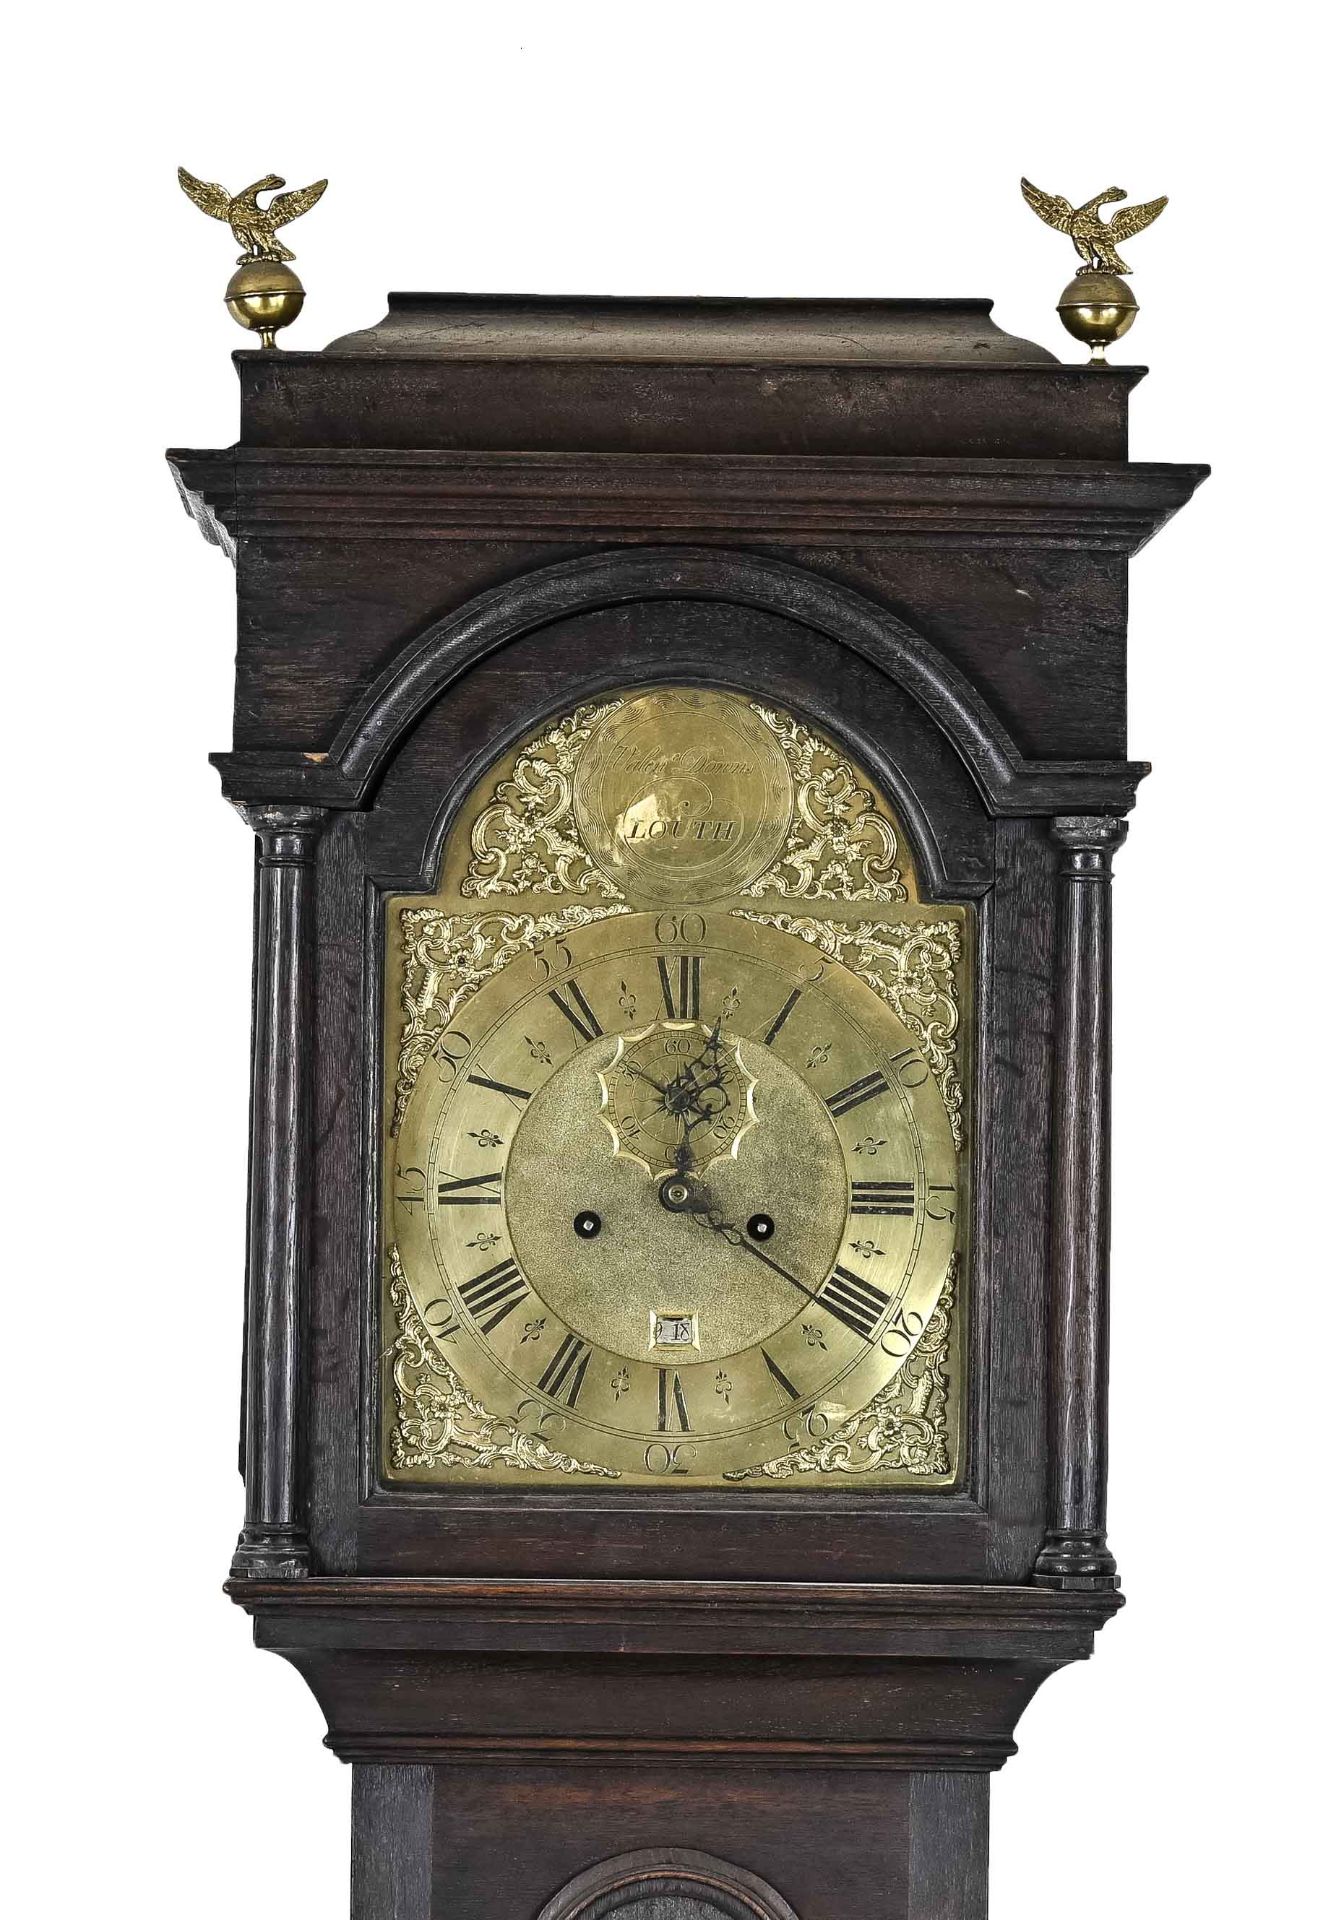 18th century English grandfather clock, H 225 cm. - Image 2 of 4